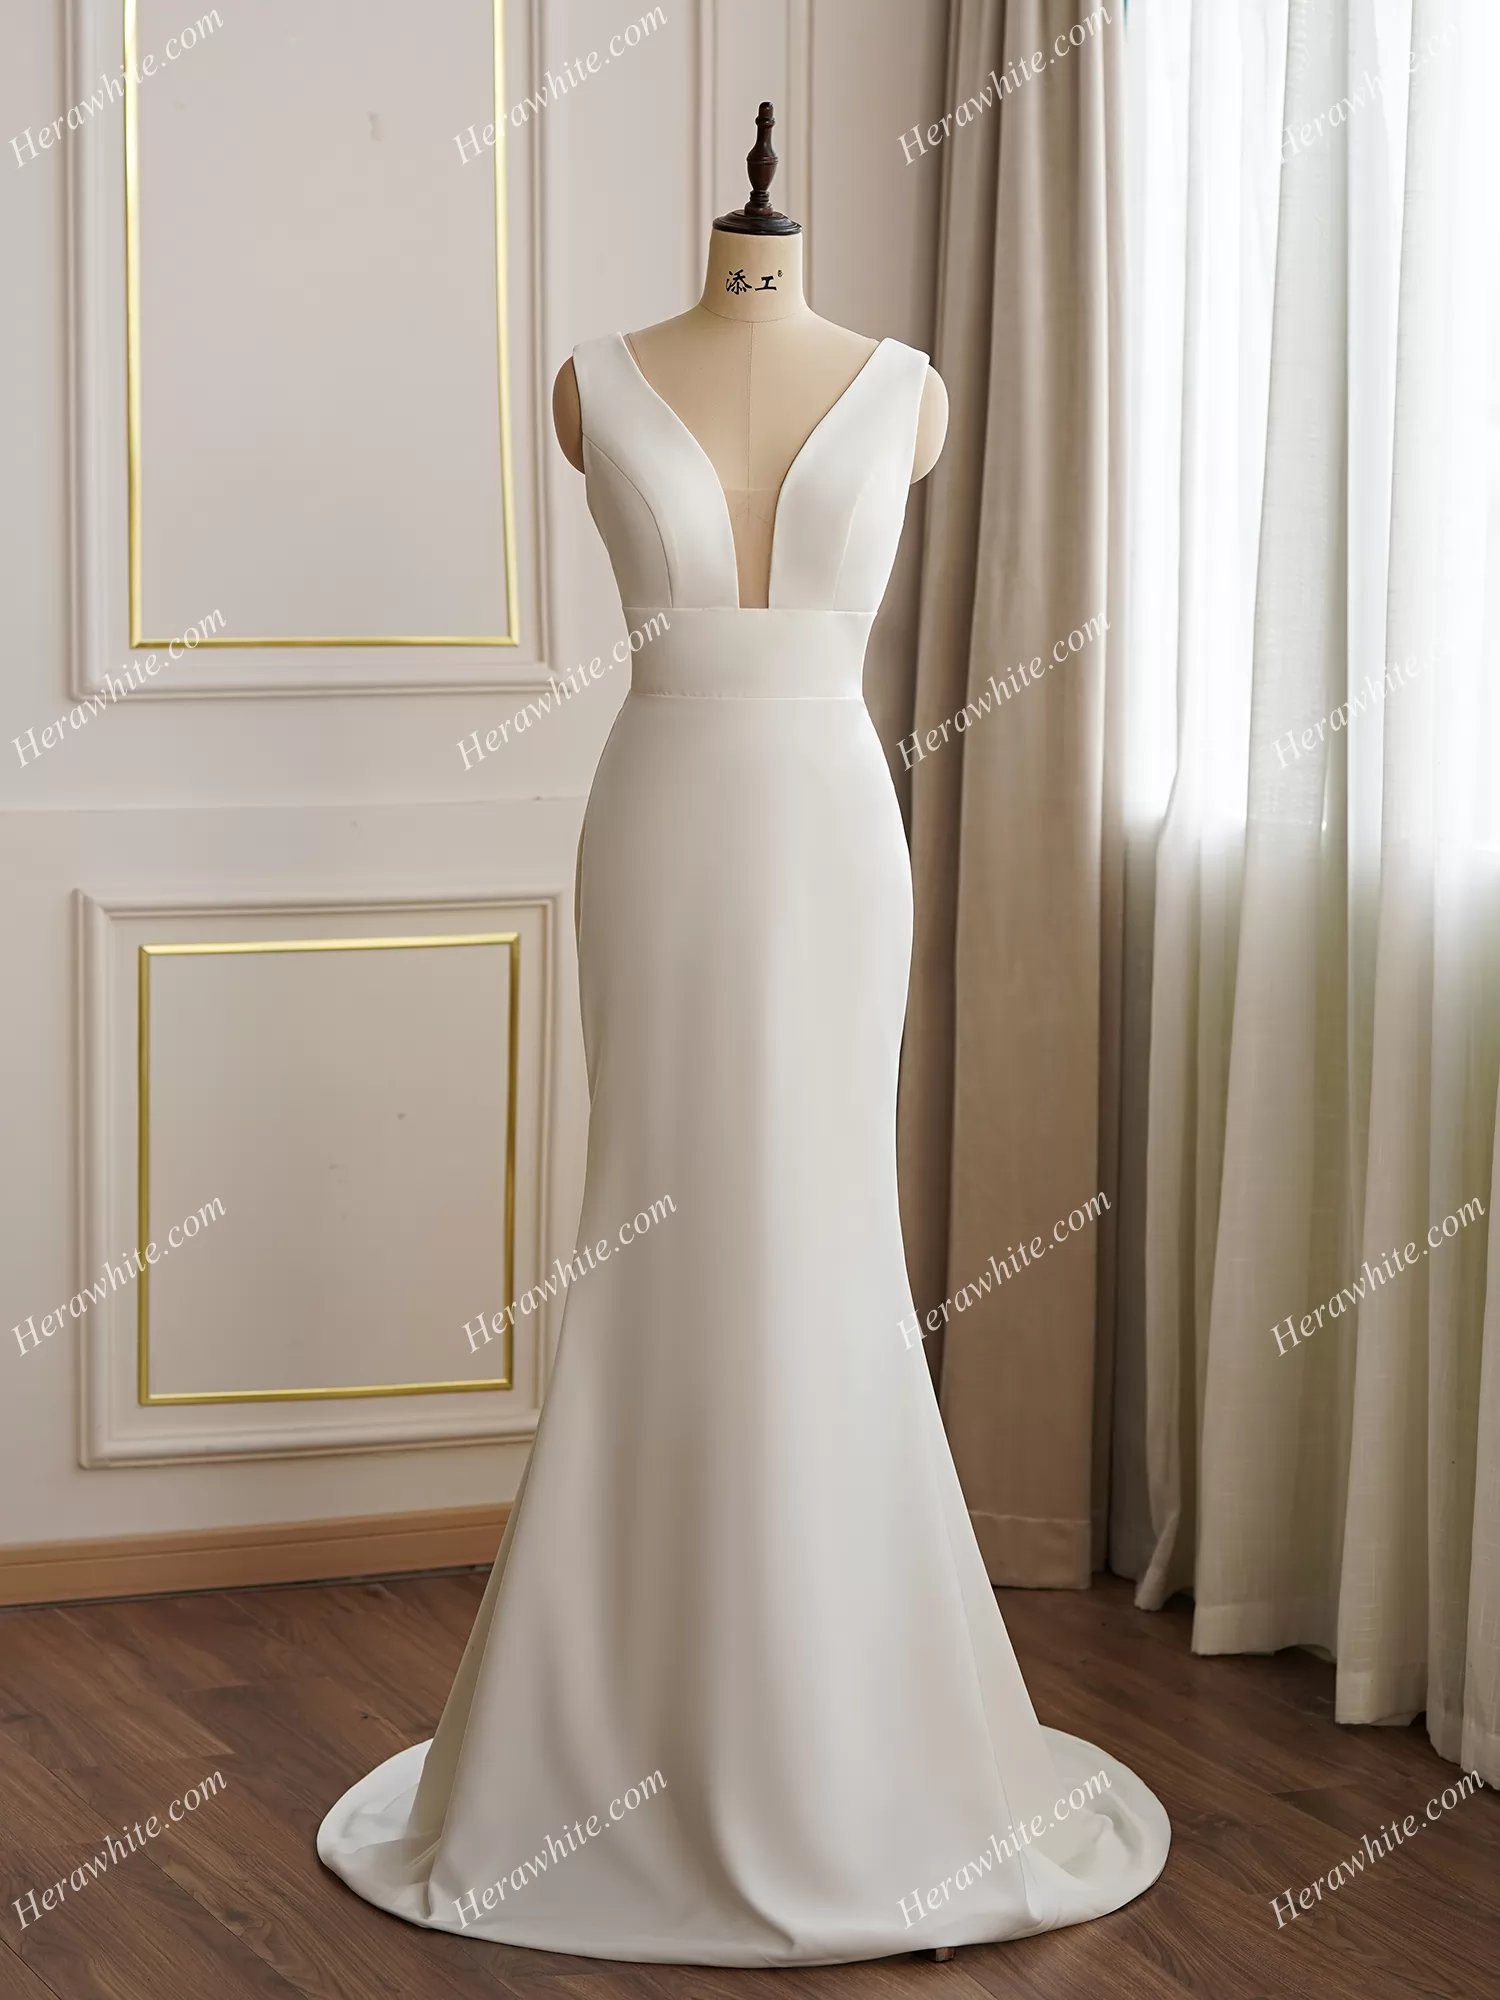 SWEETQT New Korean Bright Wedding Dress Wedding Dresses White